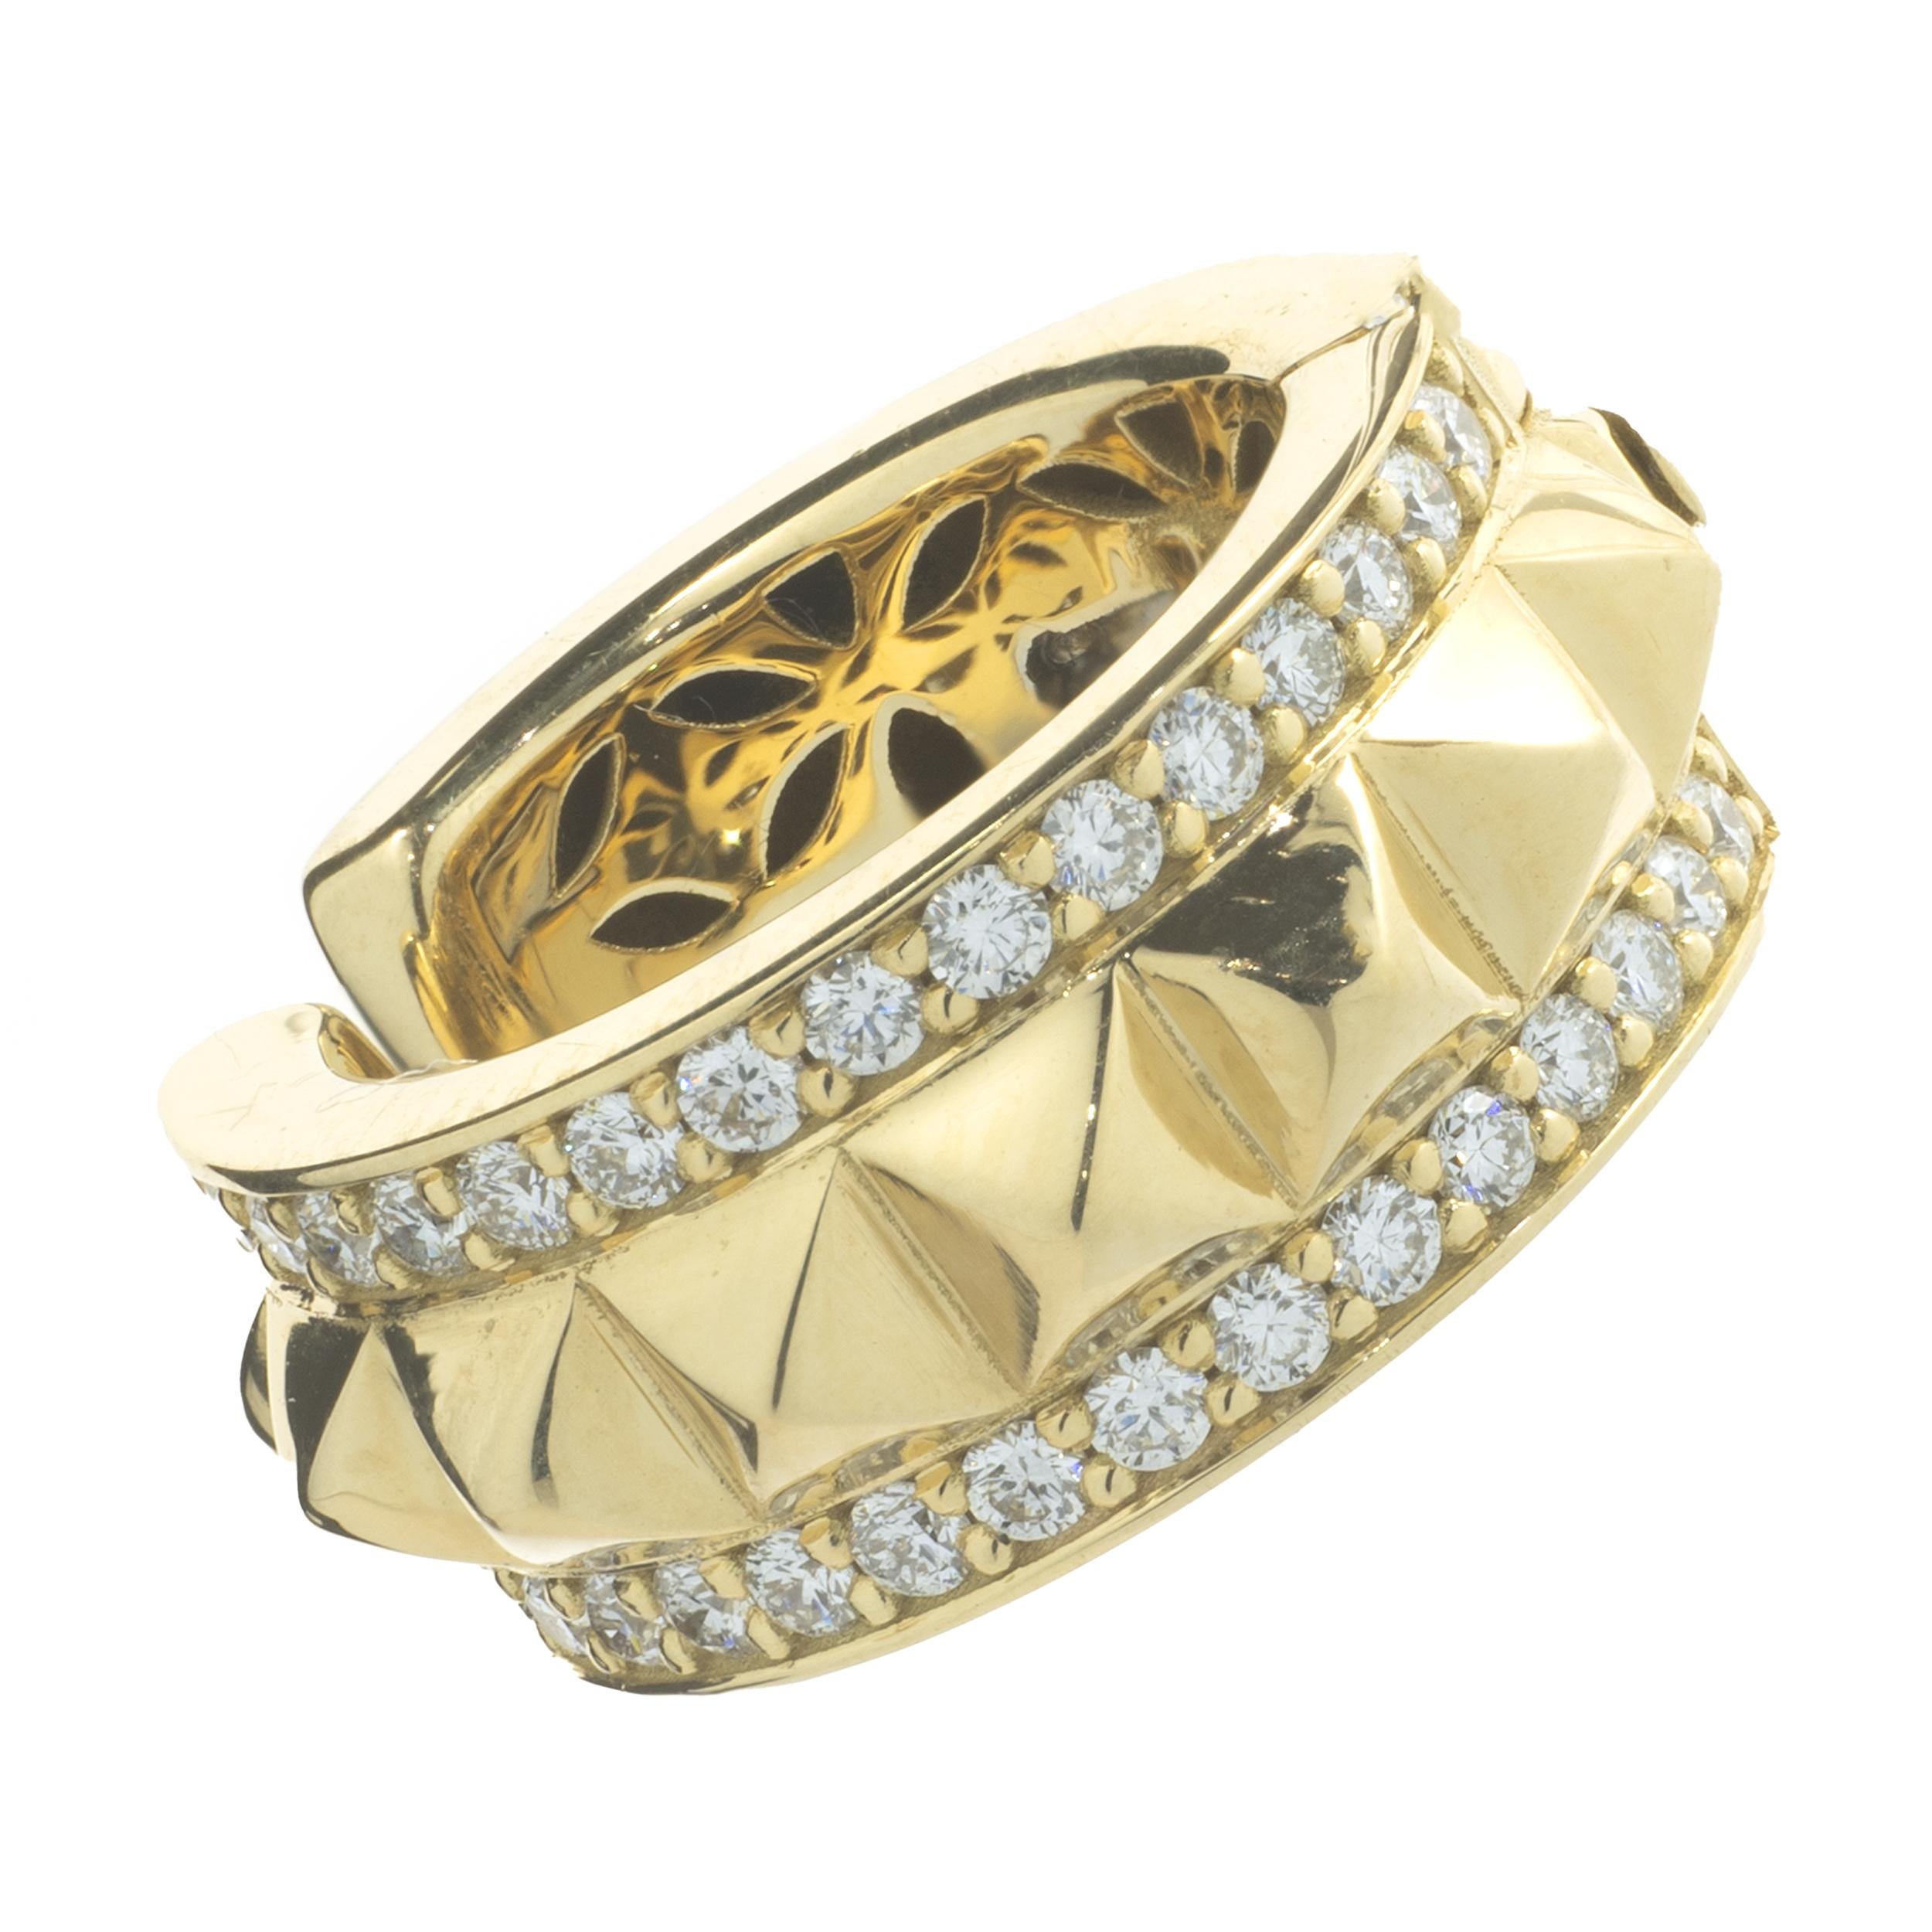 Designer: custom designed 
Material: 18K yellow gold
Diamonds: 32 round brilliant cut = 0.23ttw
Color: G
Clarity: VS
Dimensions: cuff measures 14mm in length
Weight:  4.83 grams	